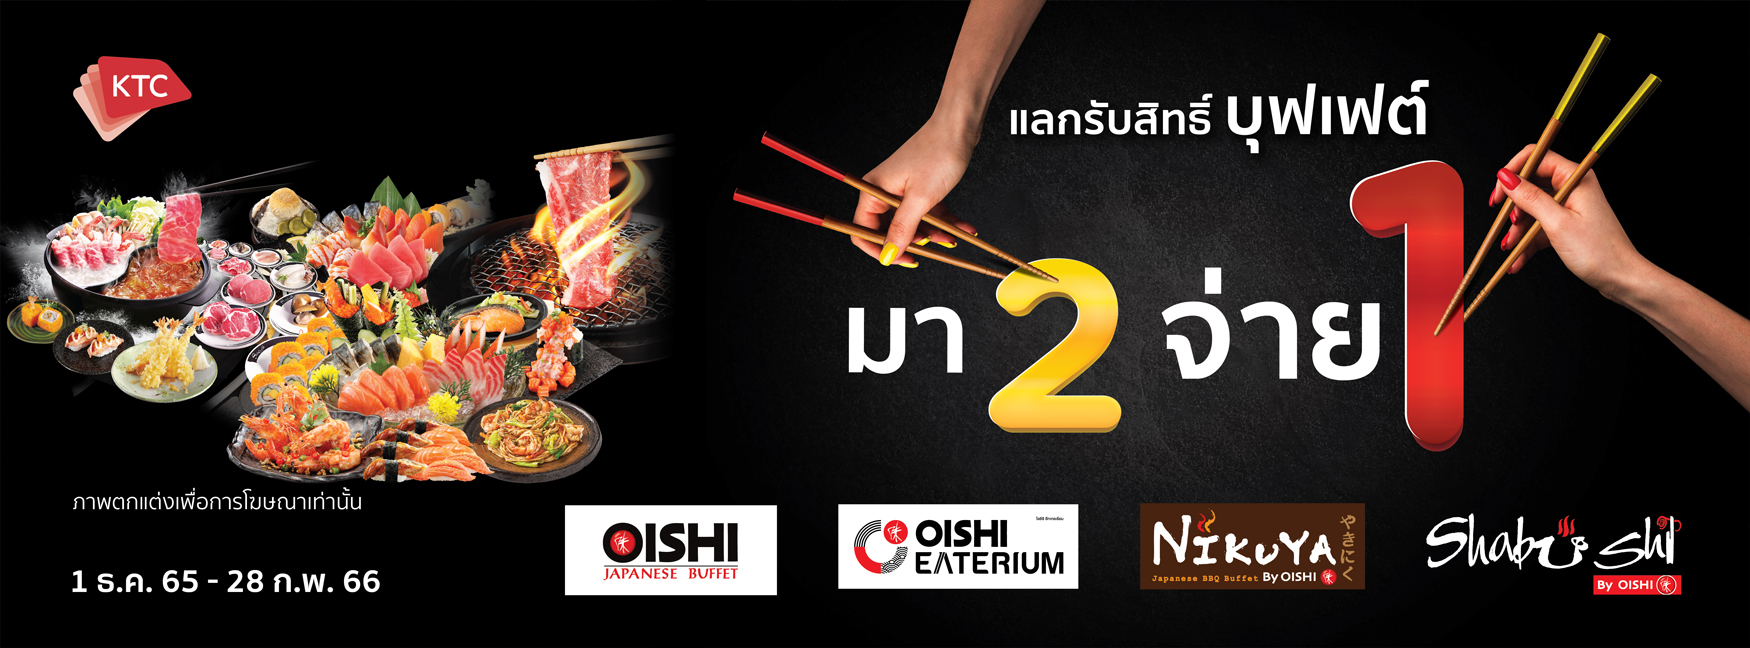 KTC บุฟเฟต์ มา 2 จ่าย 1 แบรนด์ที่เข้าร่วม  :  Oishi Eaterium, Oishi Buffet, Shabushi และ Nikuya